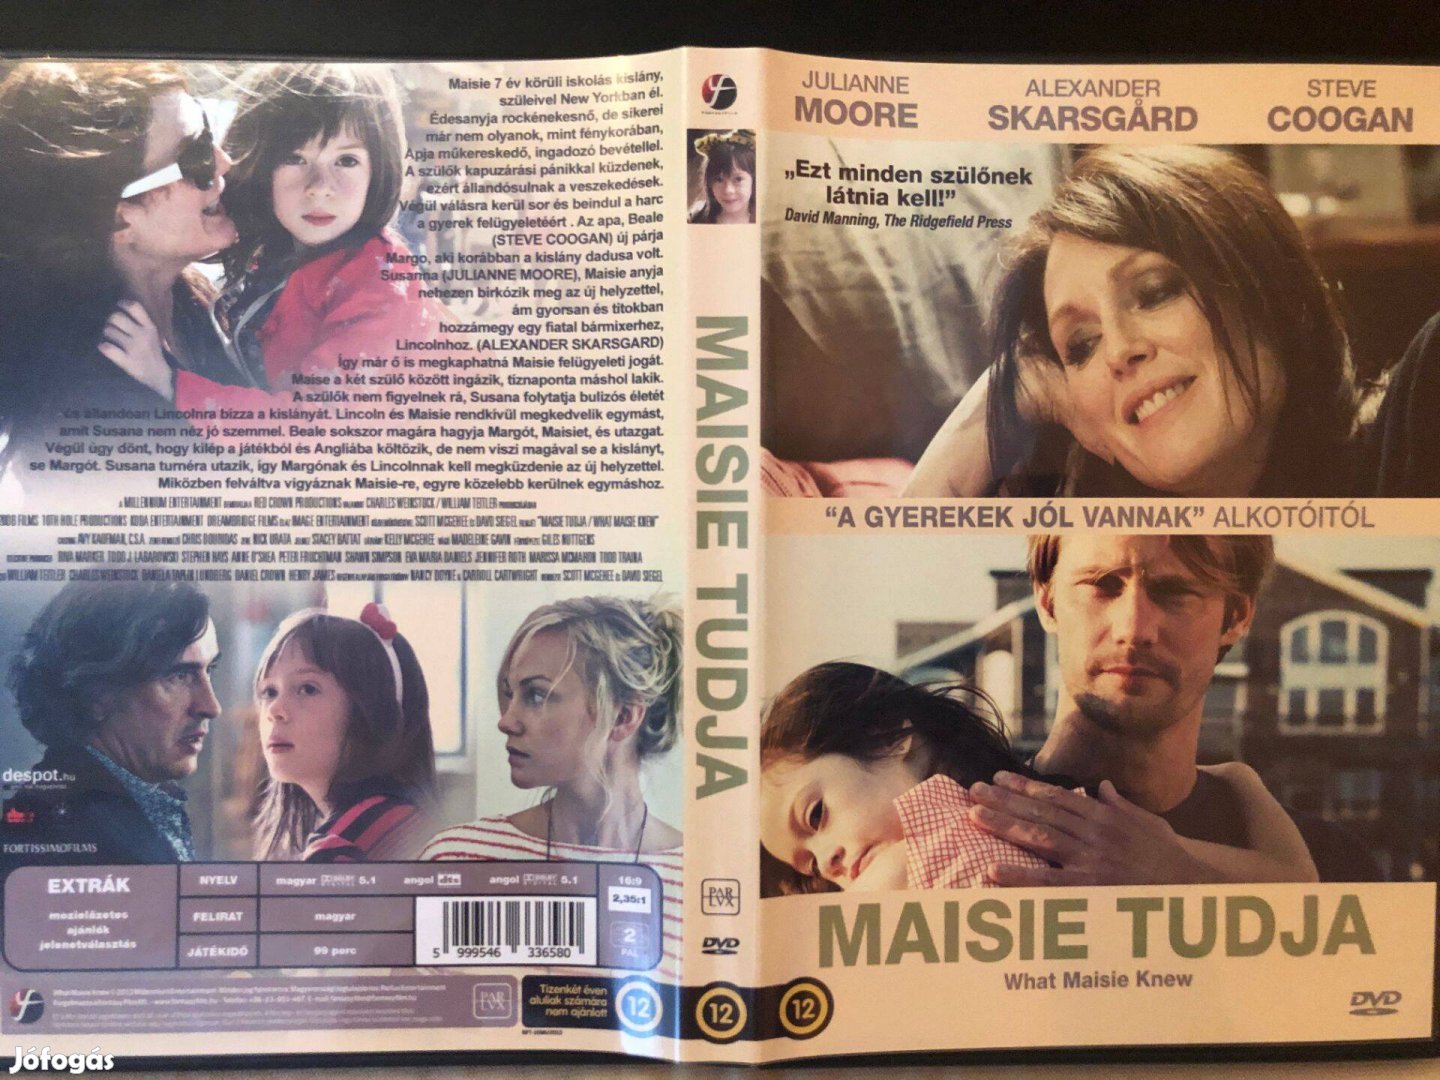 Maisie tudja (karcmentes, Julianne Moore) DVD